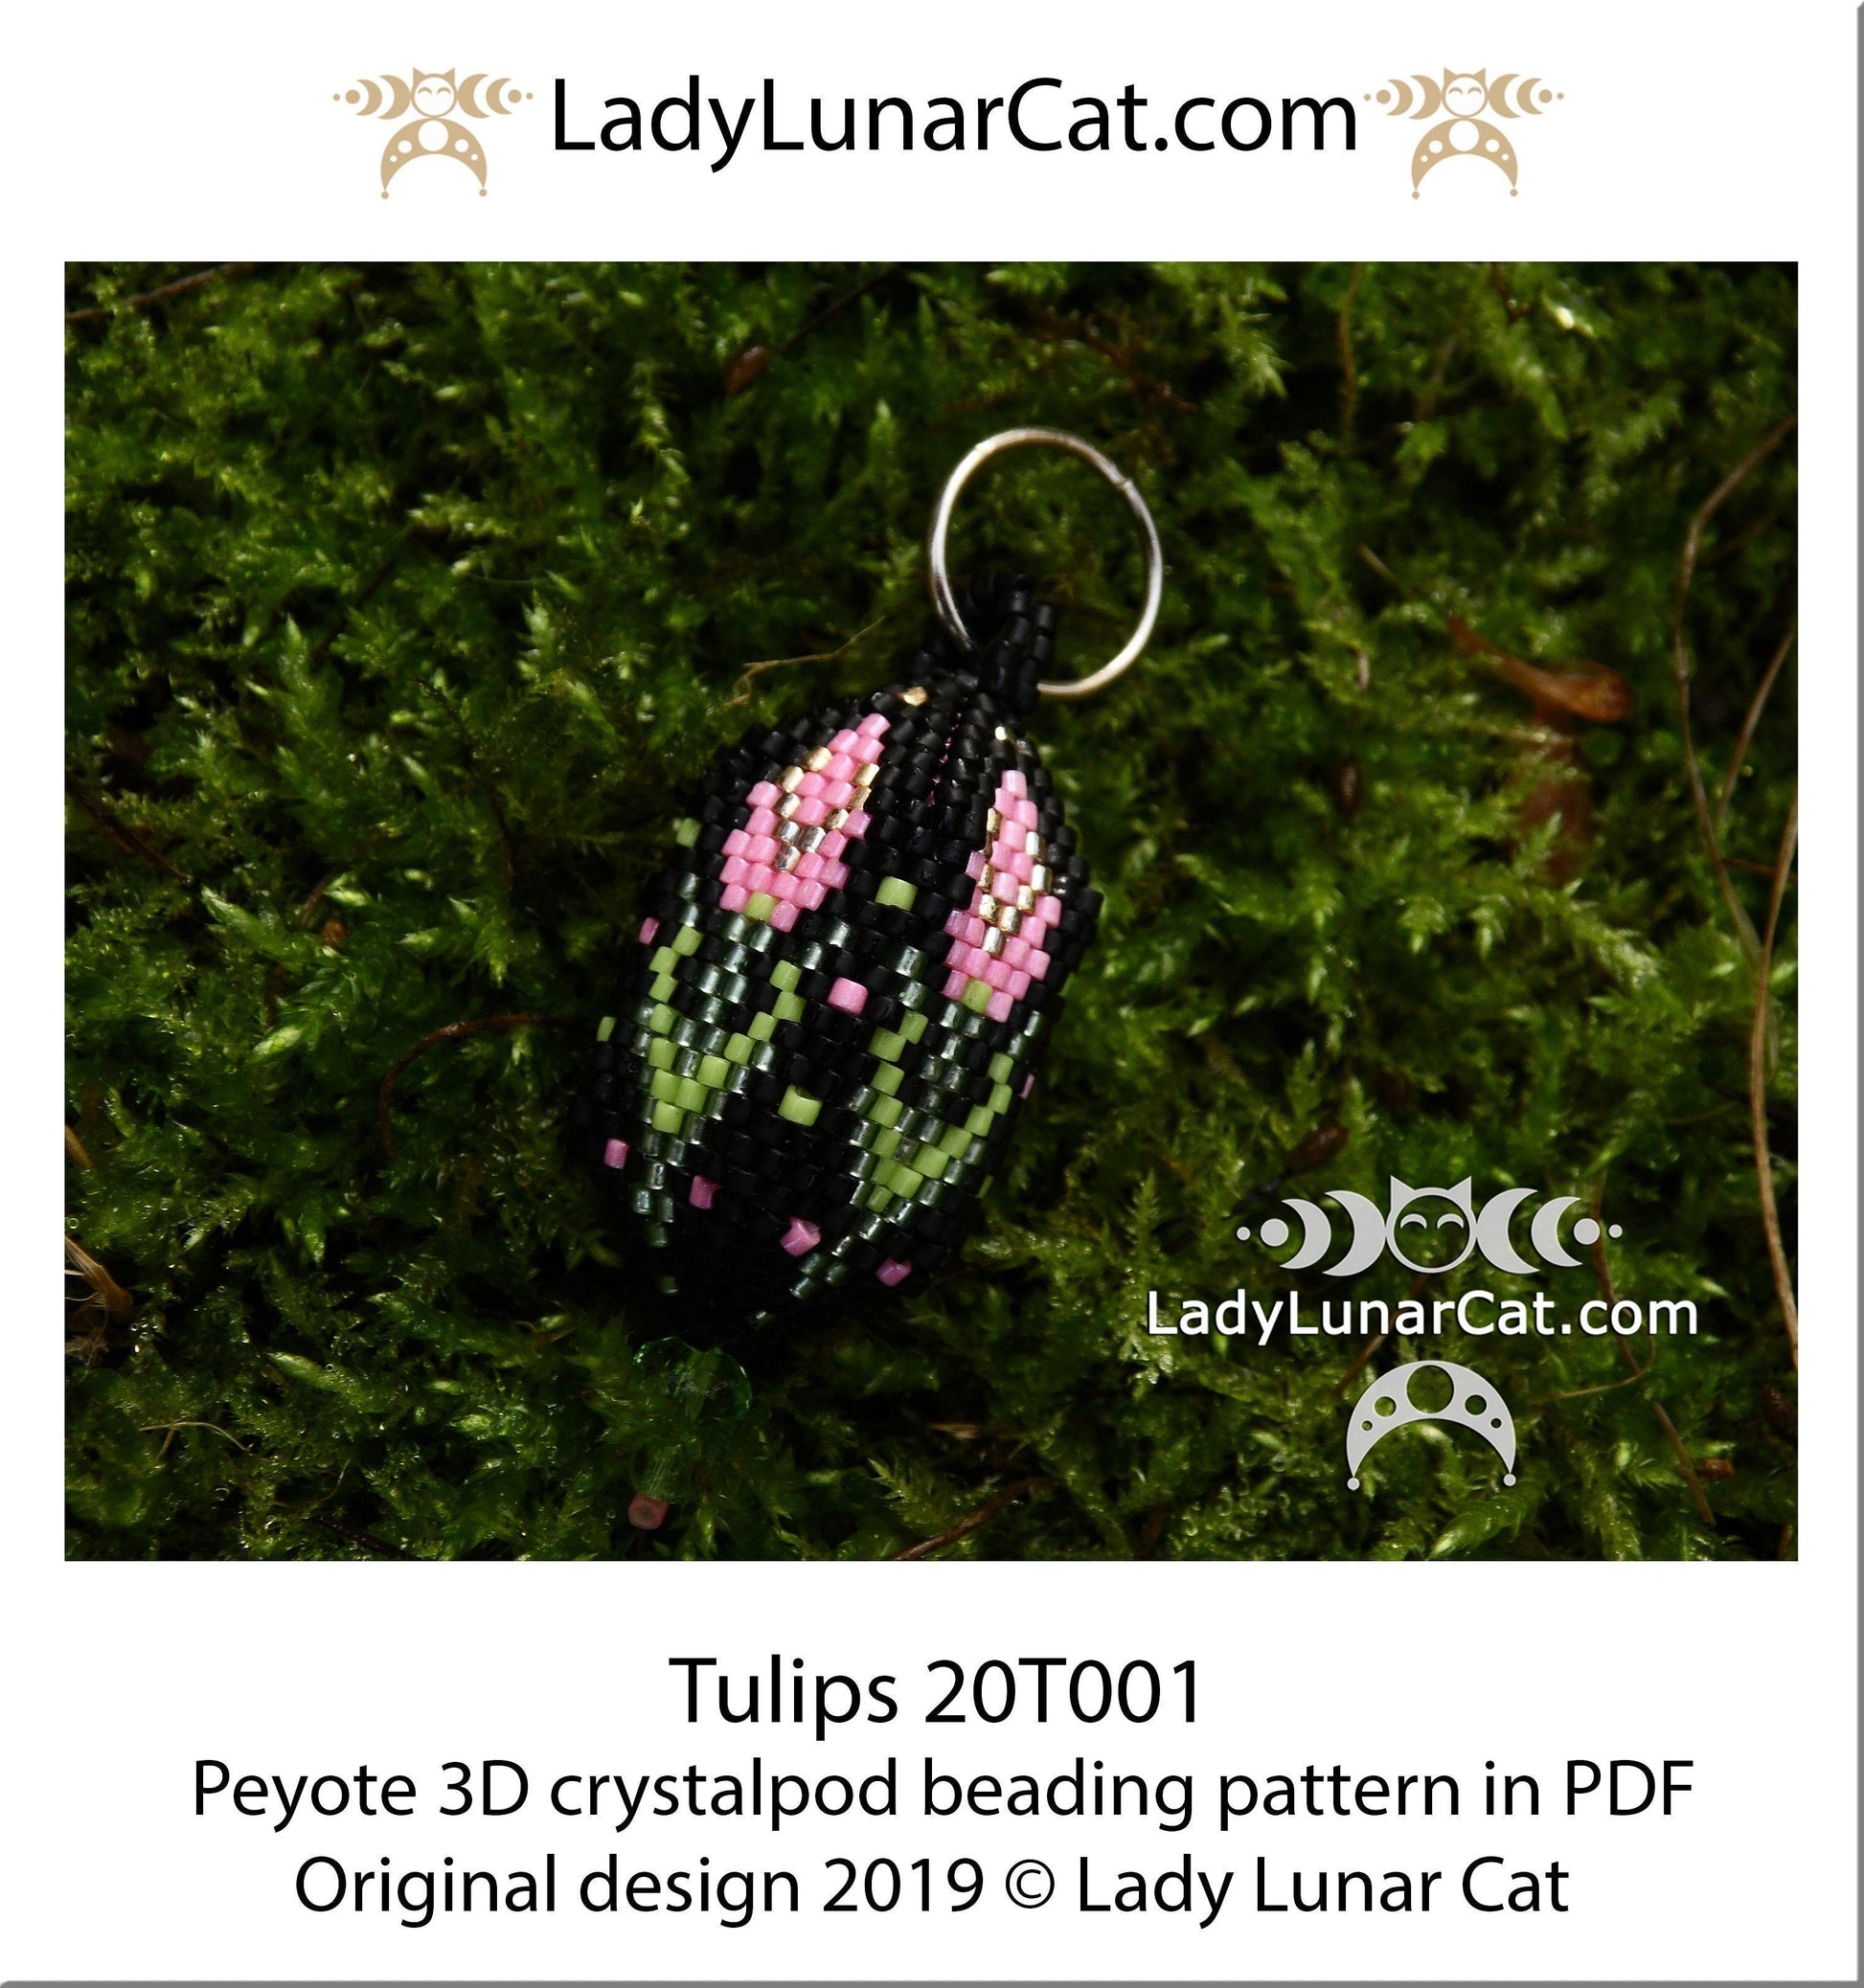 Beading tutorial for 3d Crystalpod peyote pattern  Tulip  Step by step instruction LadyLunarCat